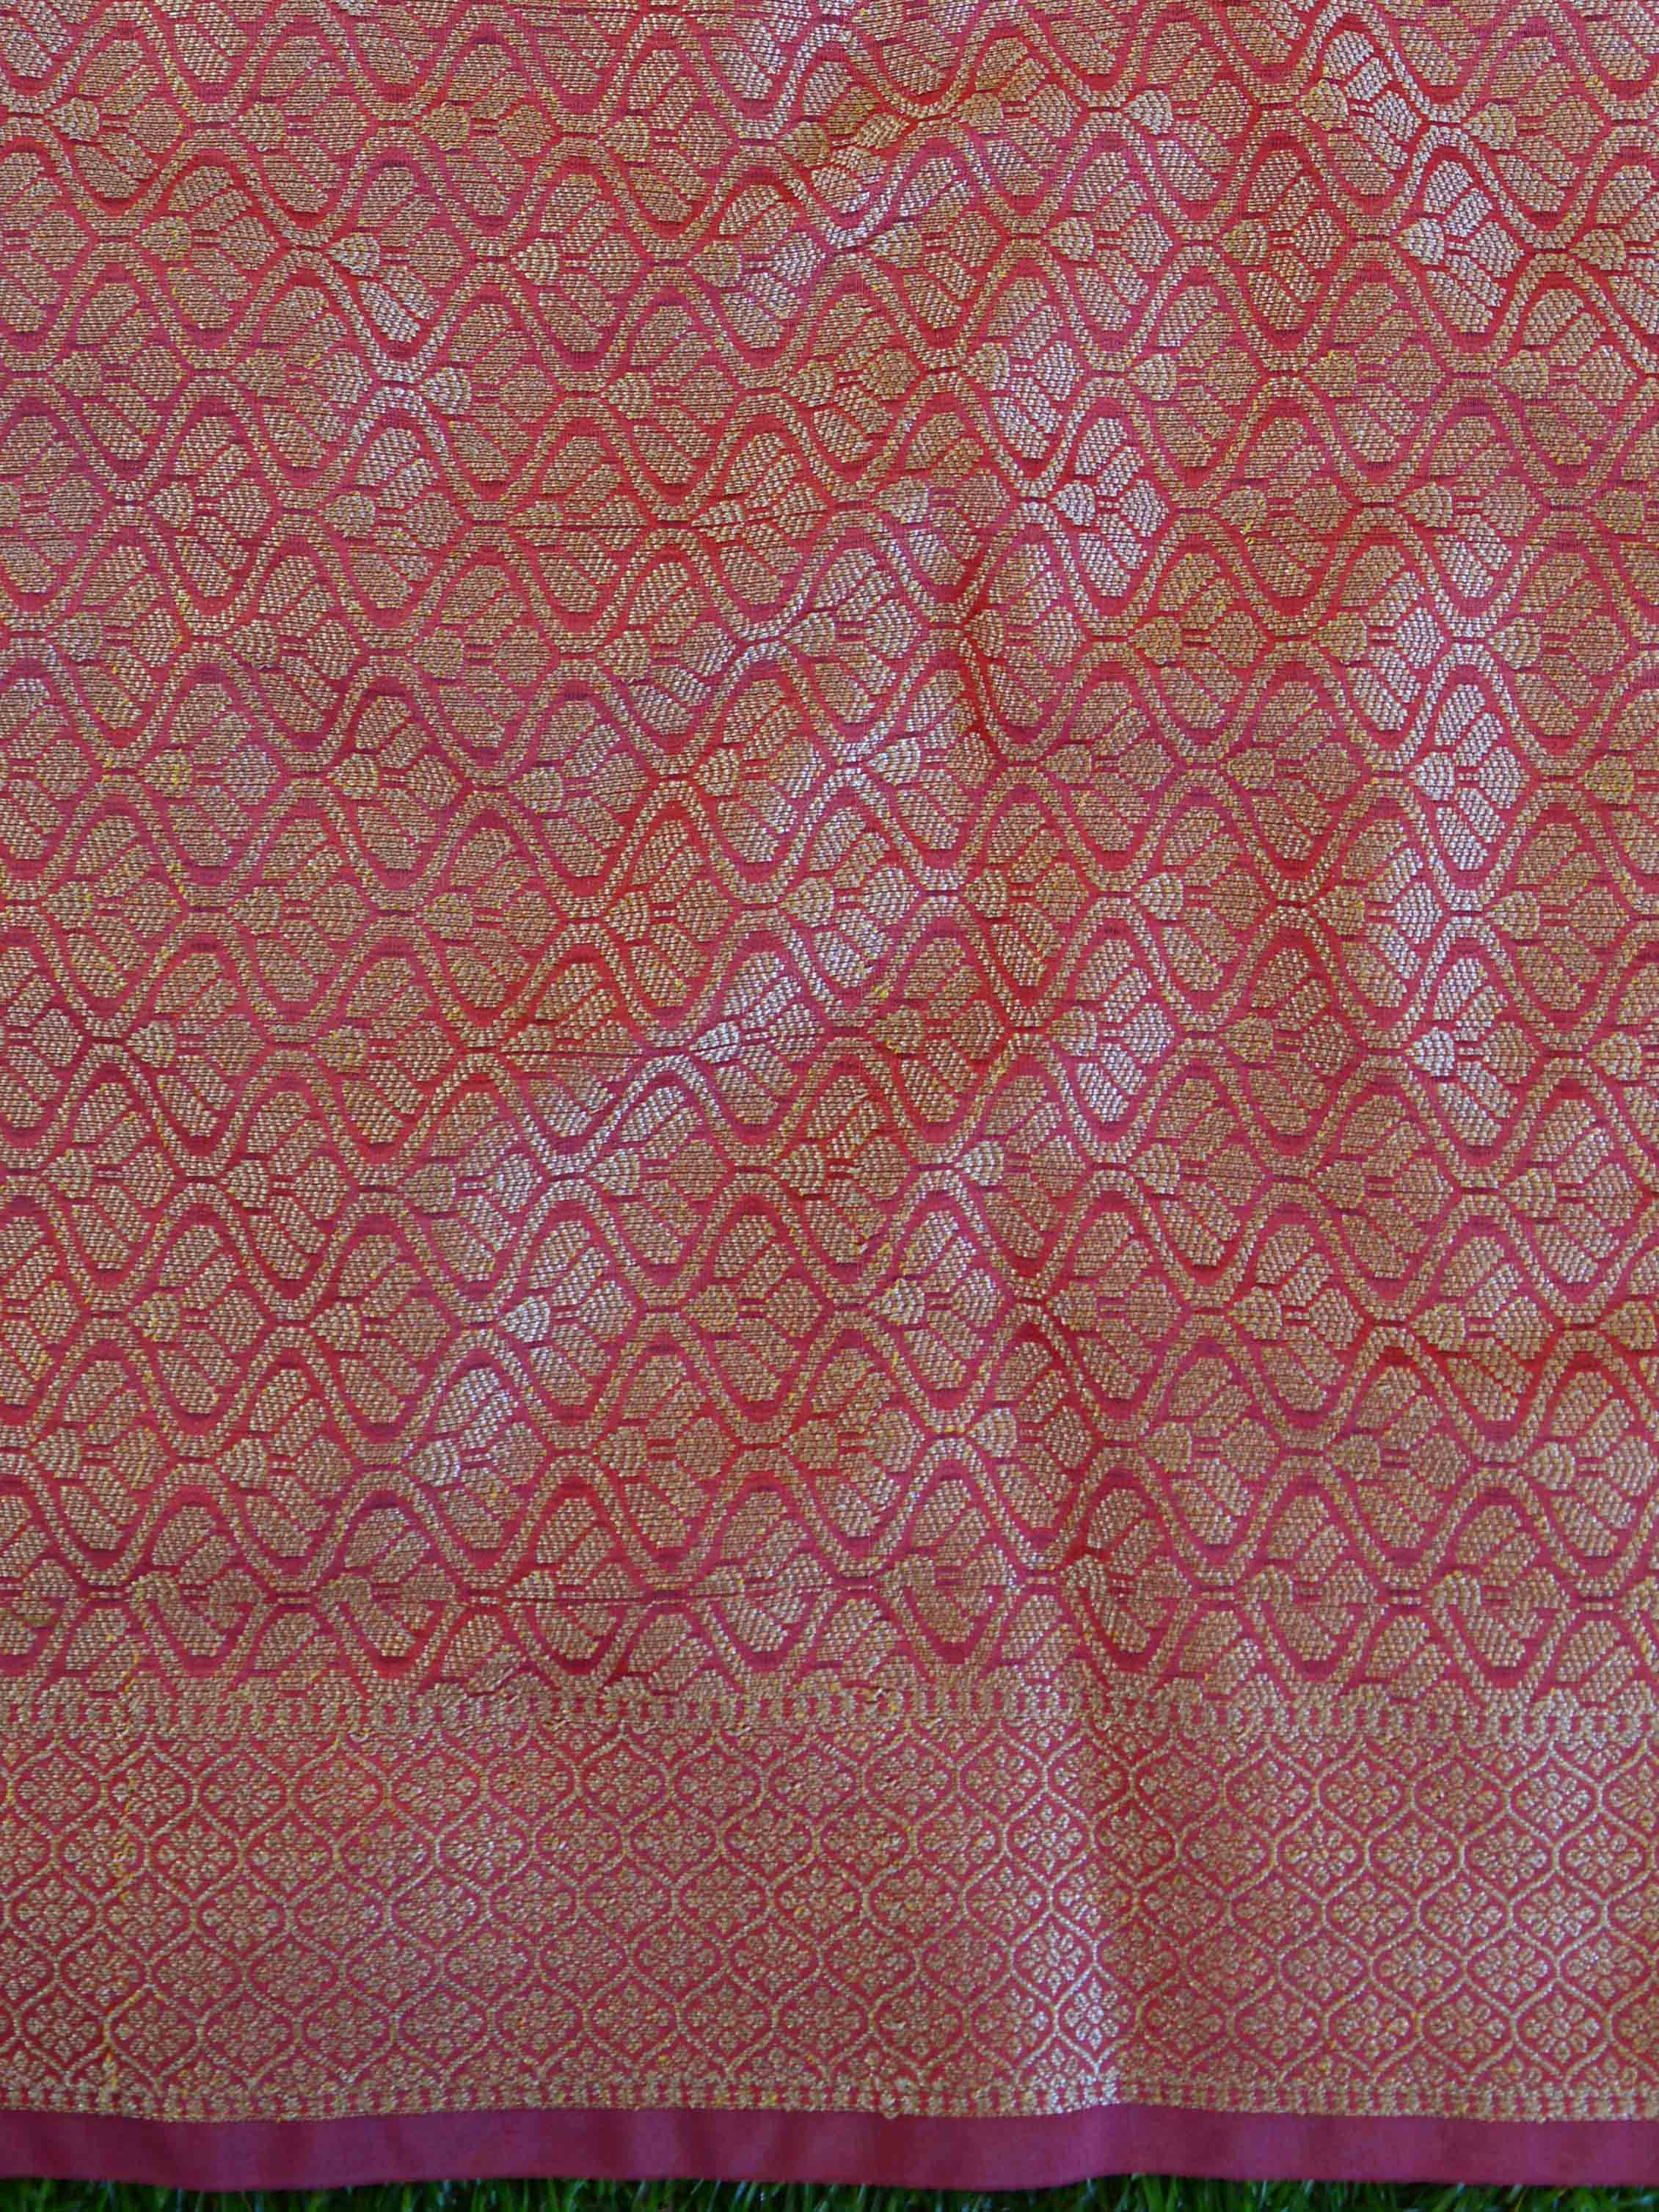 Banarasee Handwoven Semi-Chiffon Saree With Zig-Zag Design-Peach & Pink